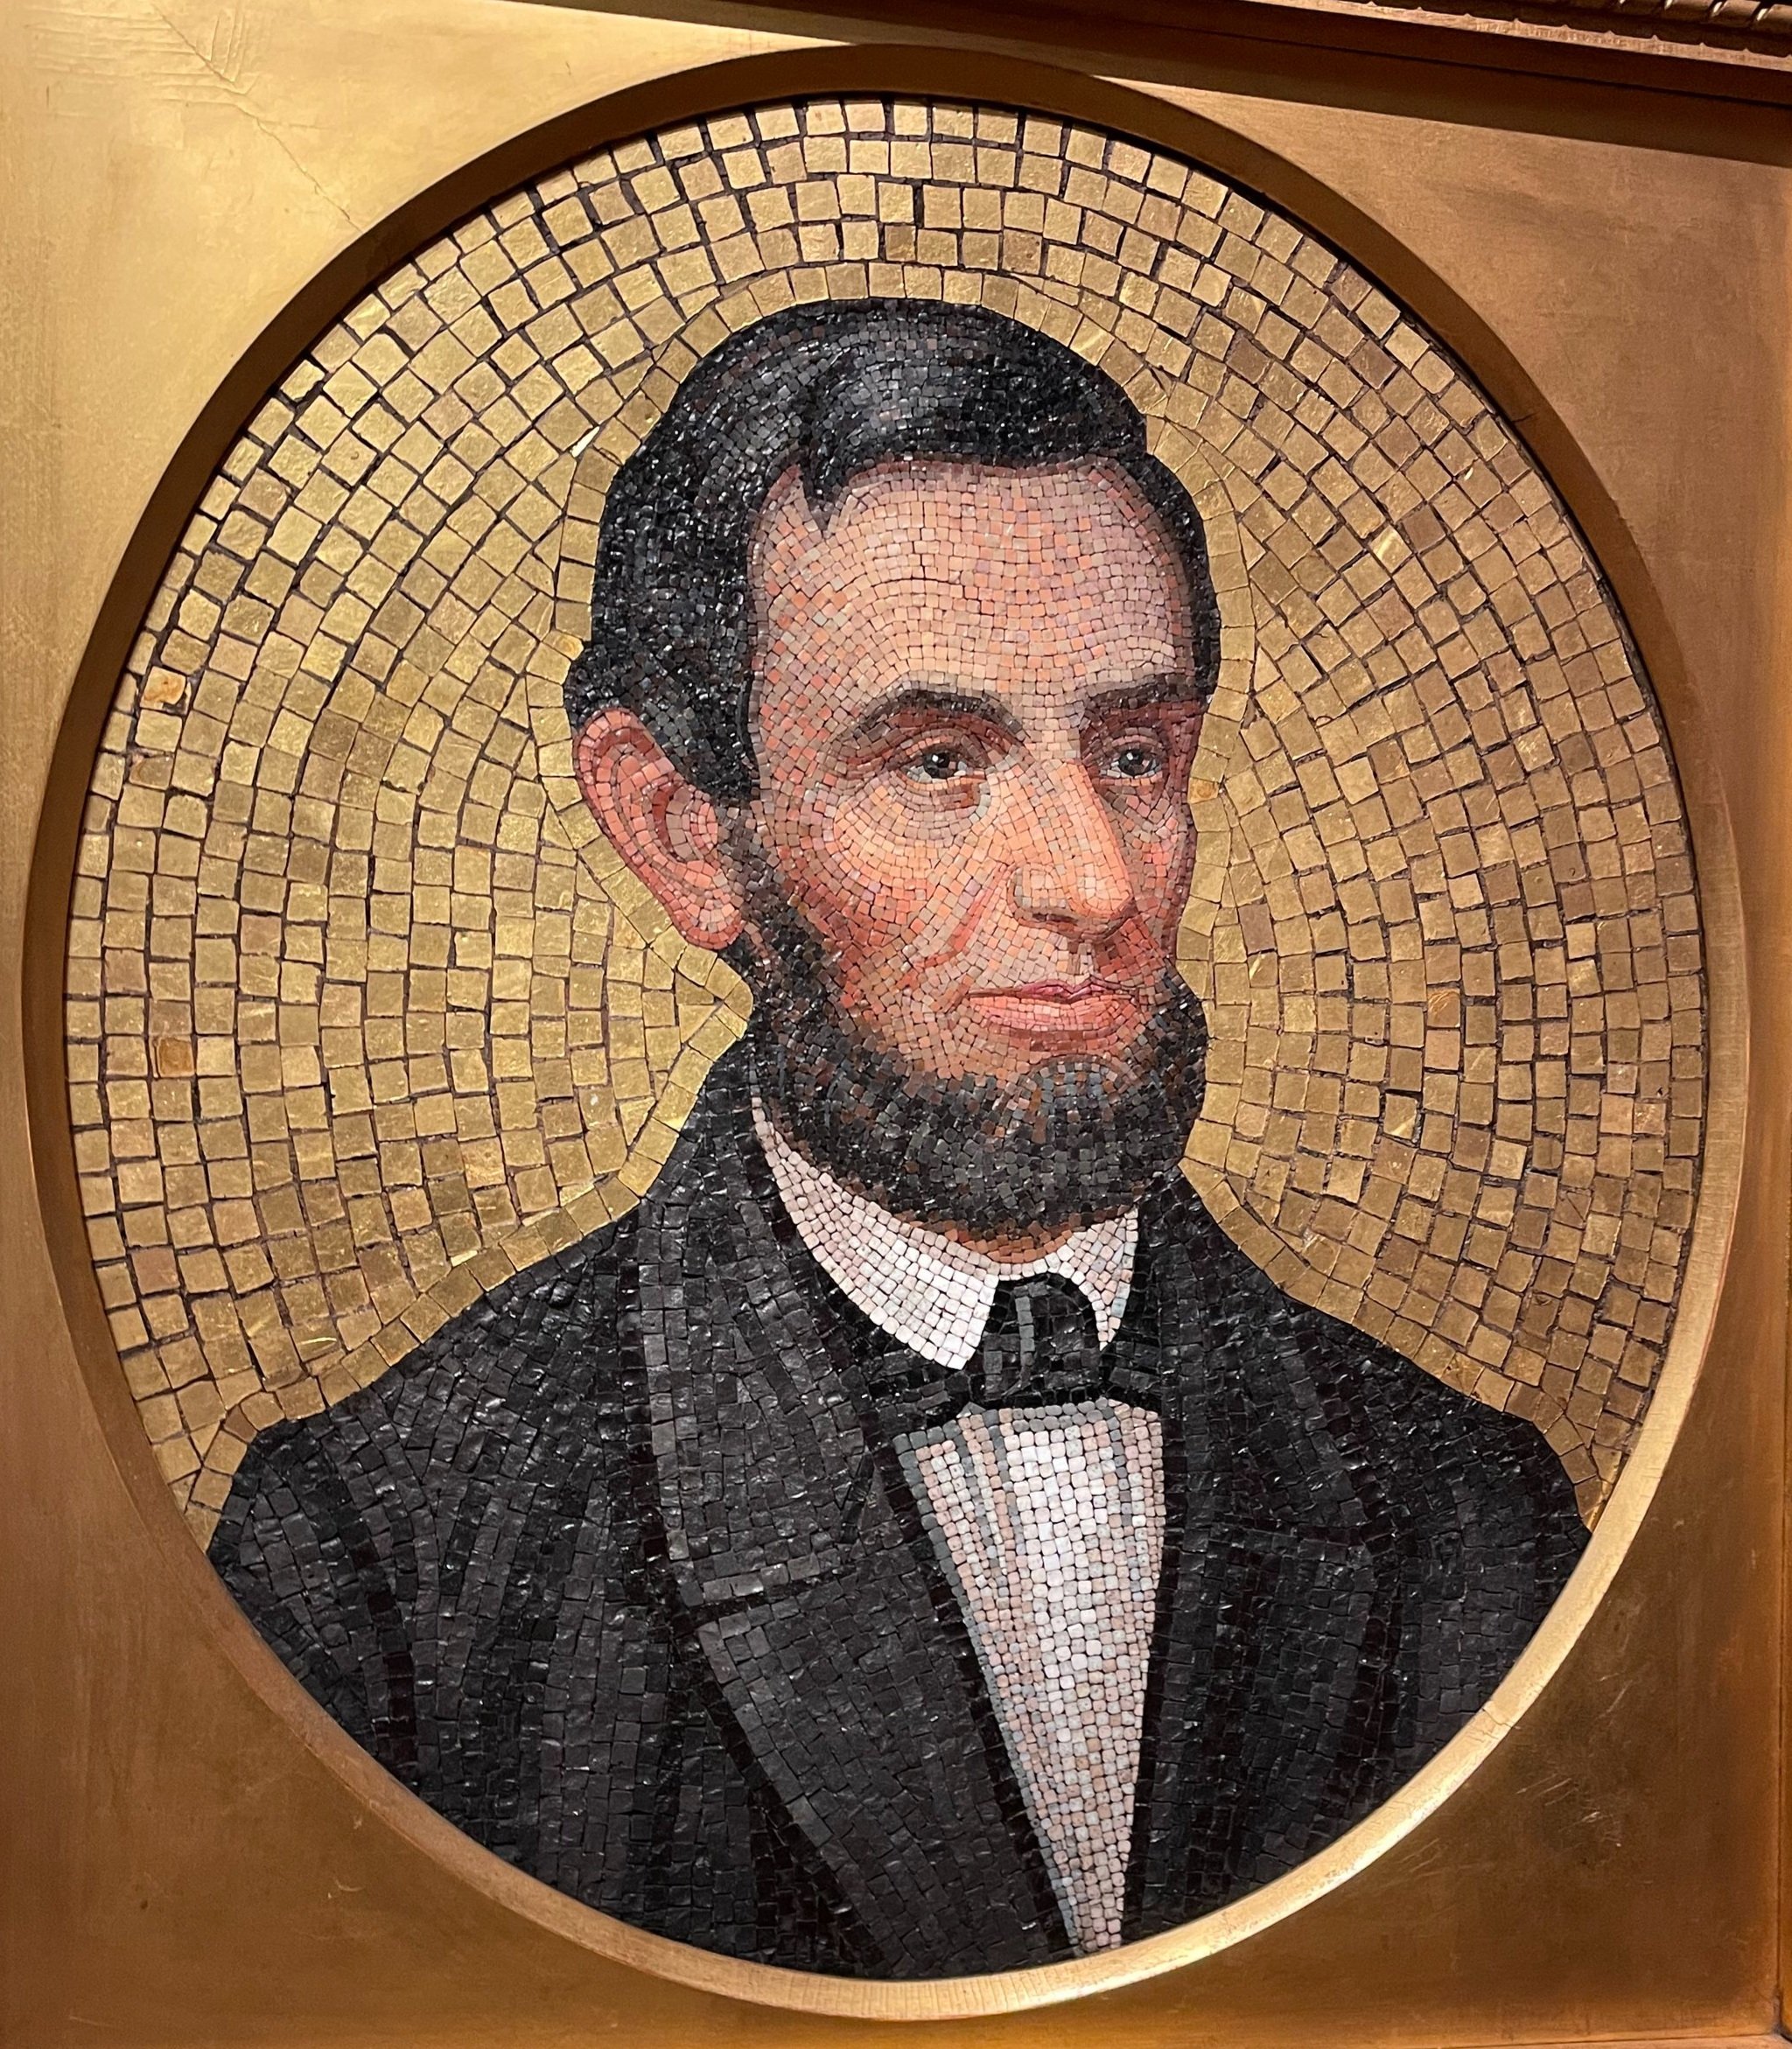 "Portrait of Abraham Lincoln" by Enrico Podio